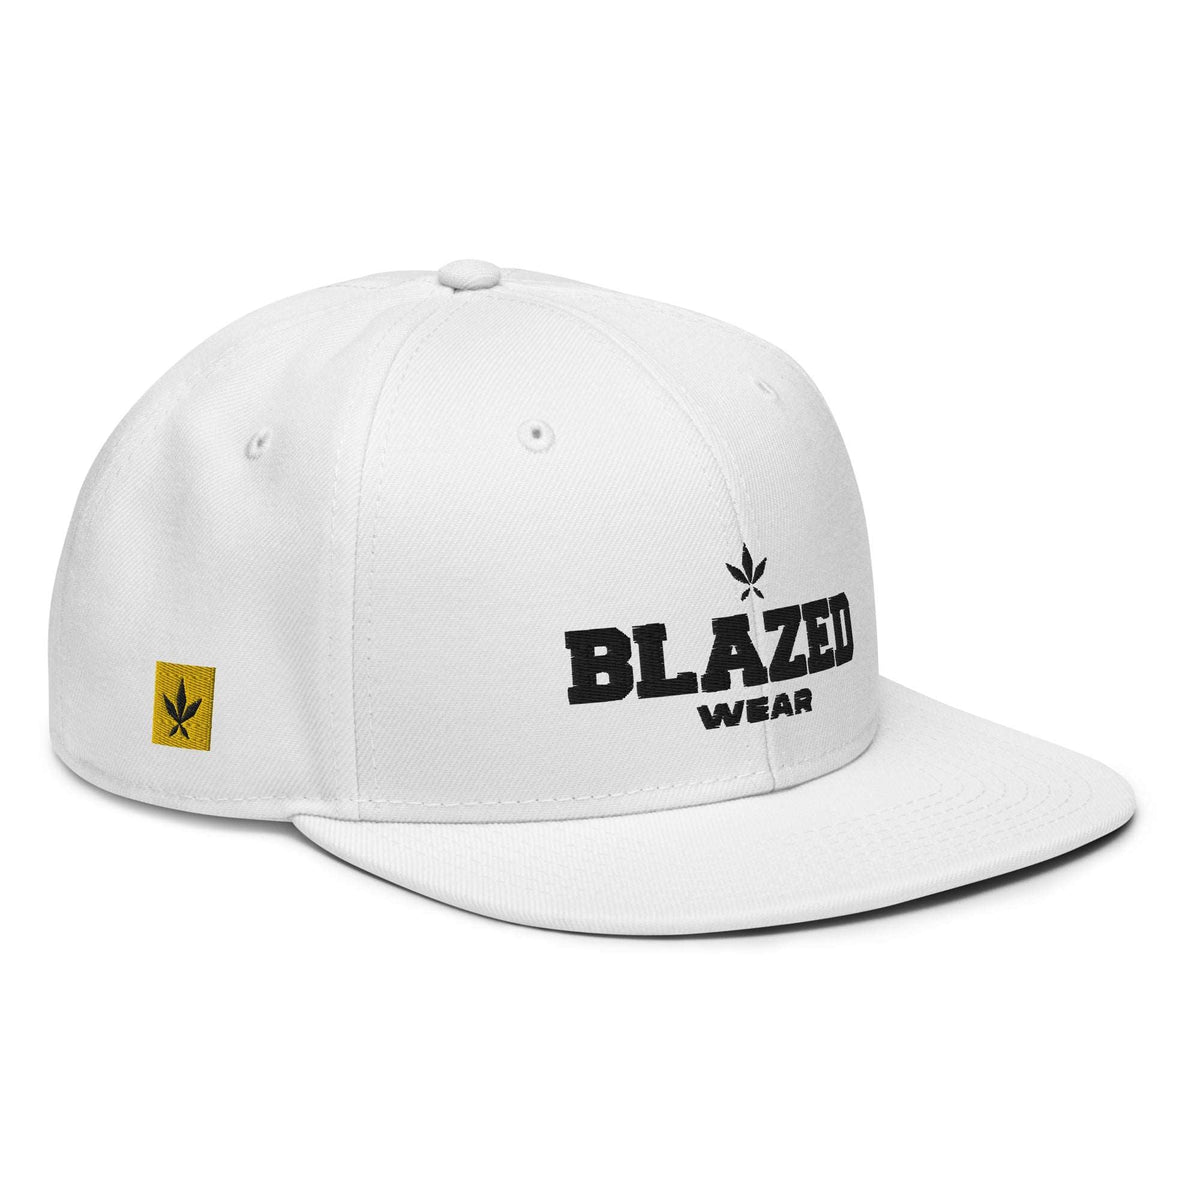 Blazed Leaf Snapback Hat - White/Gold - Blazed Wear